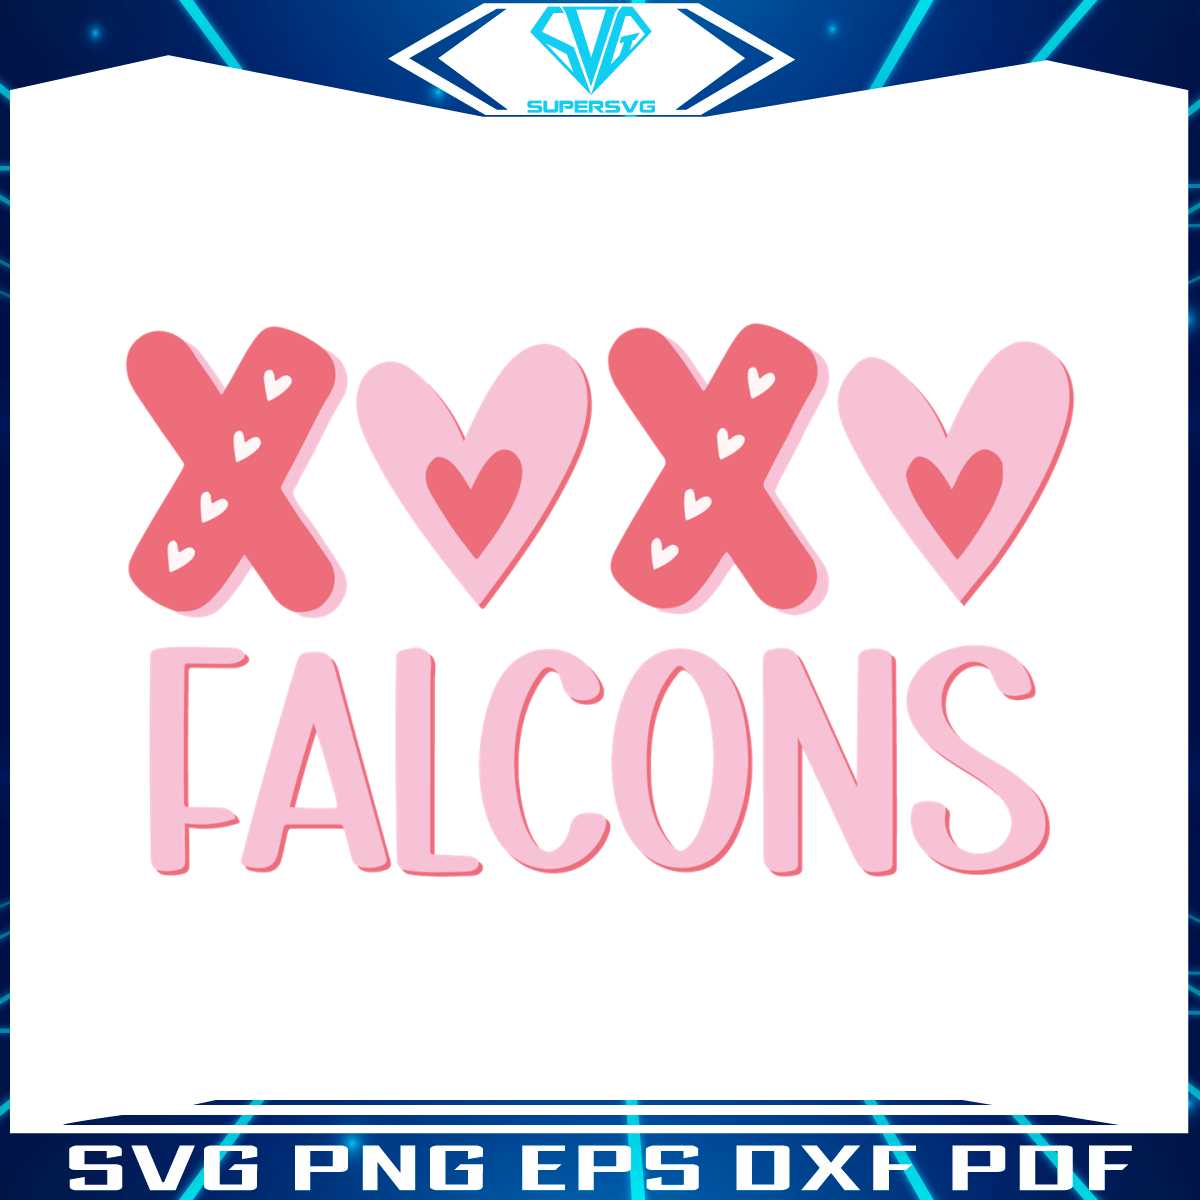 xoxo-falcons-valentines-day-svg